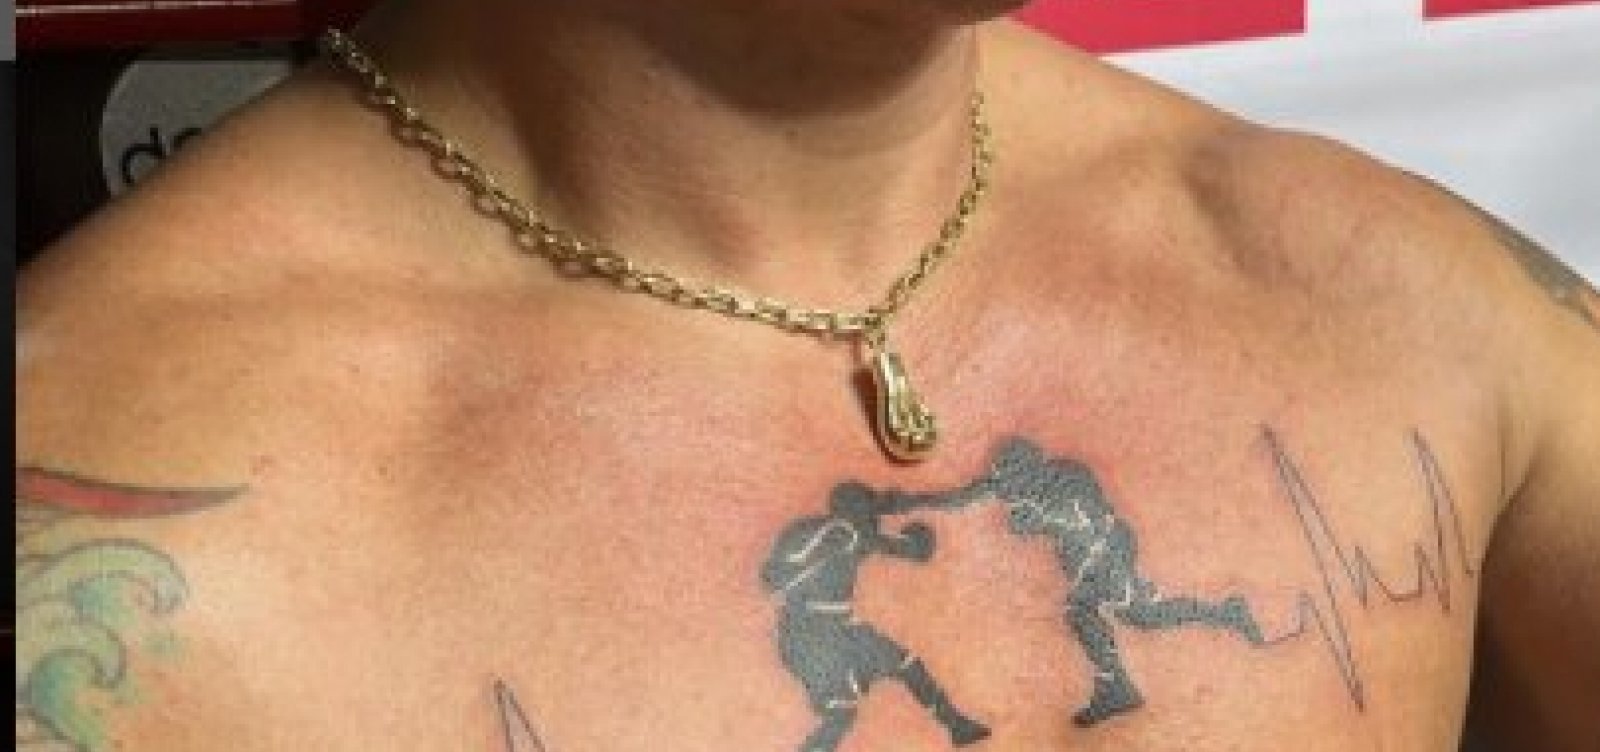 Popó tatua luta contra o humorista Whindersson Nunes